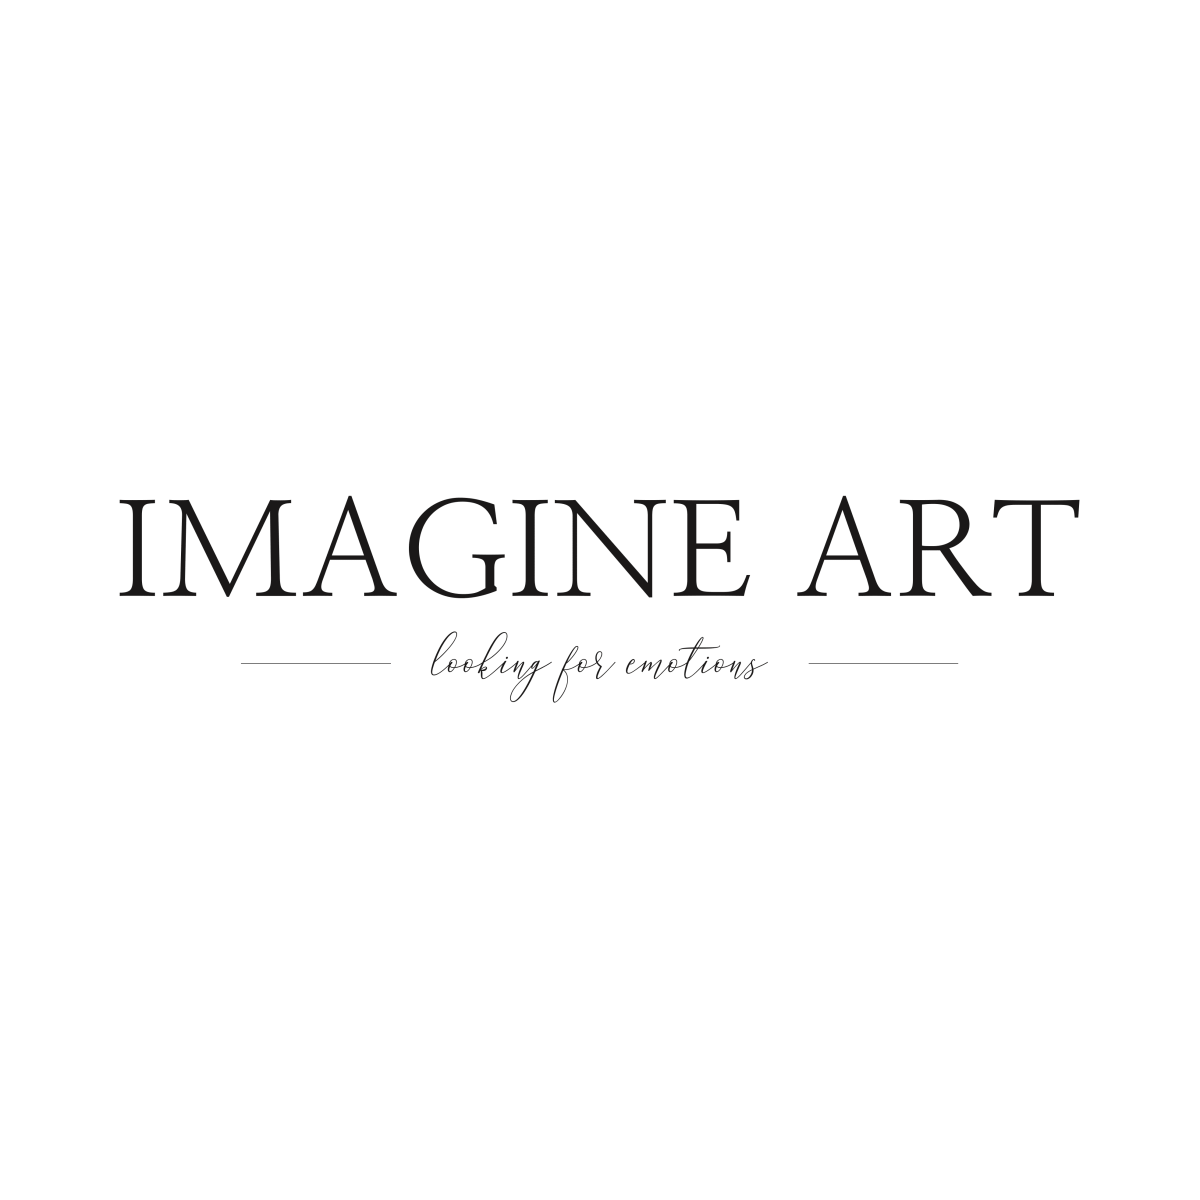 Imagine Art